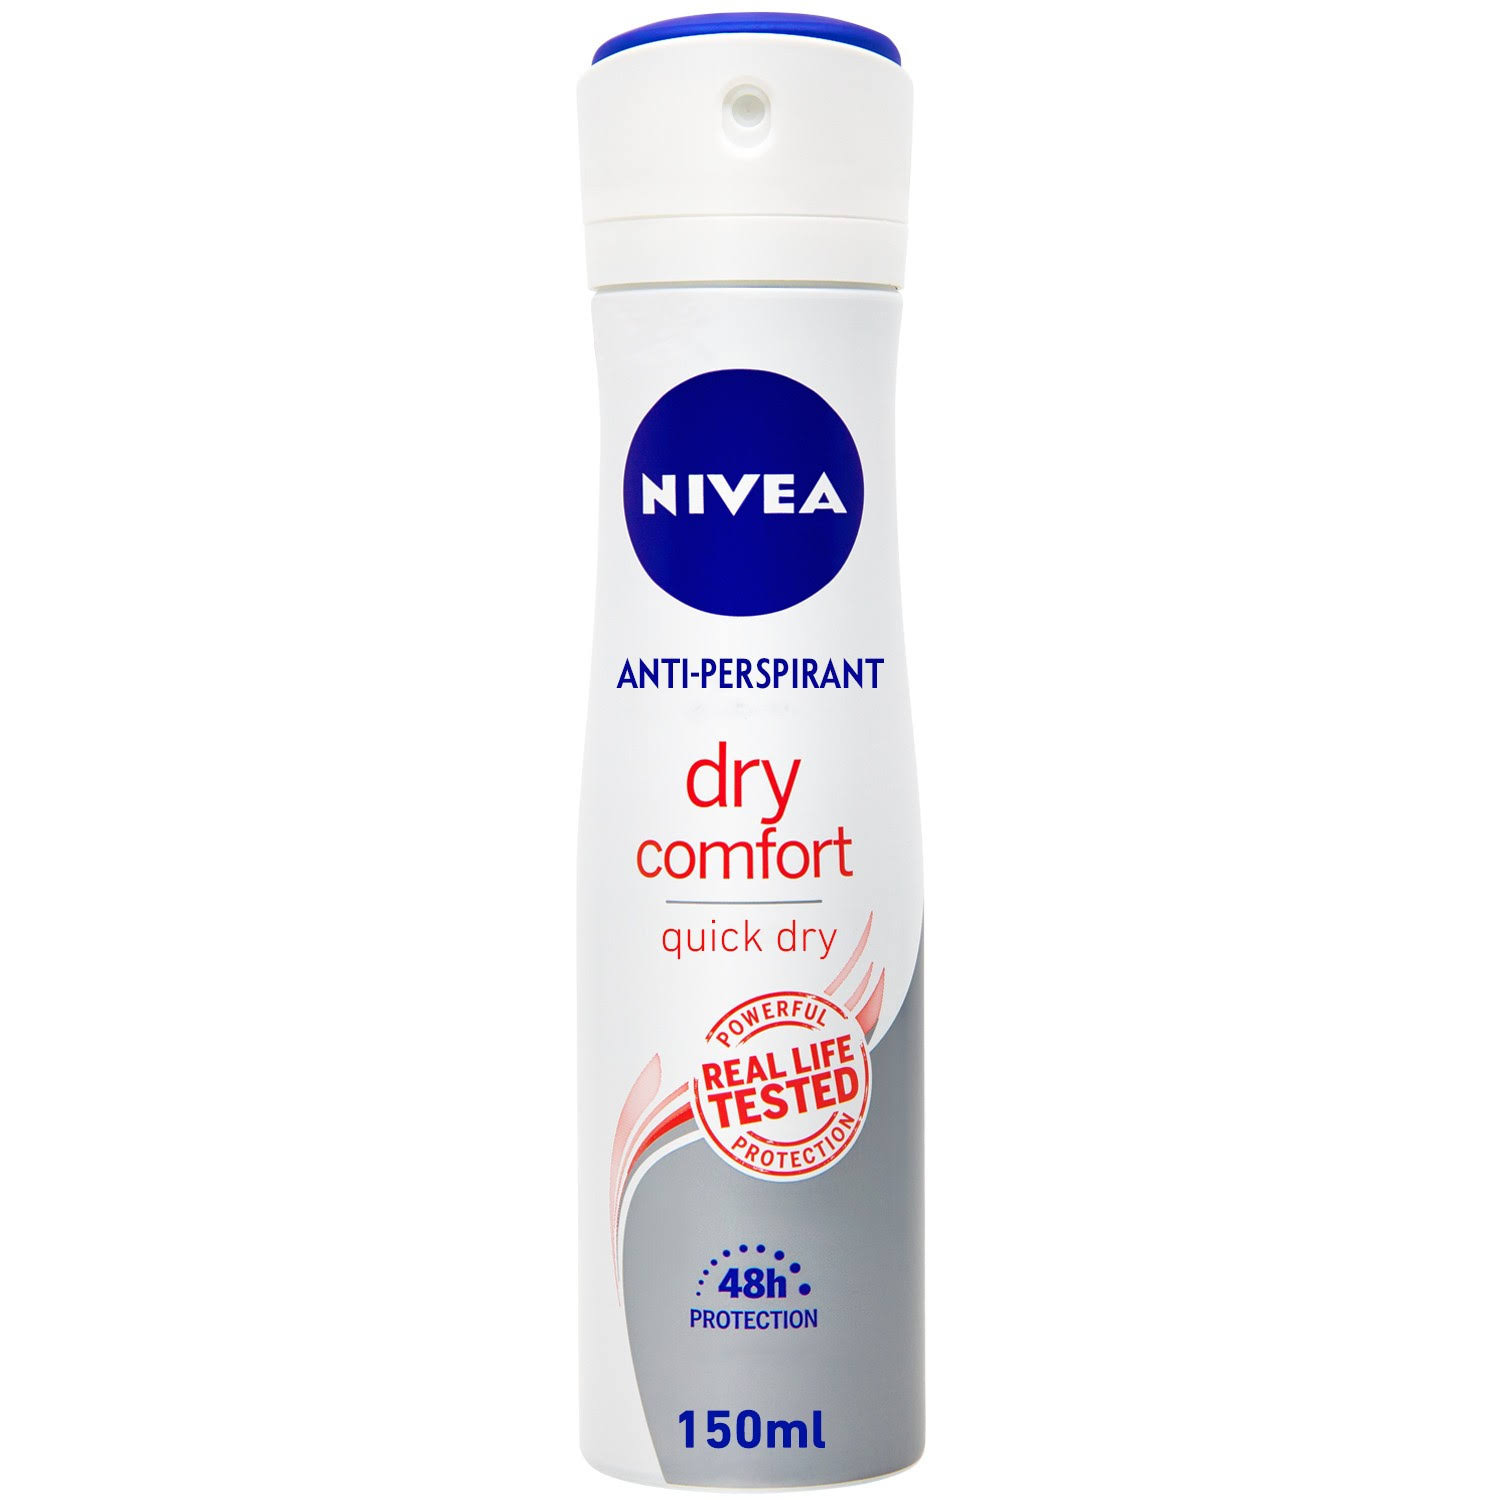 NIVEA Dry Confidence Anti-Perspirant Deodorant Spray - 150ml